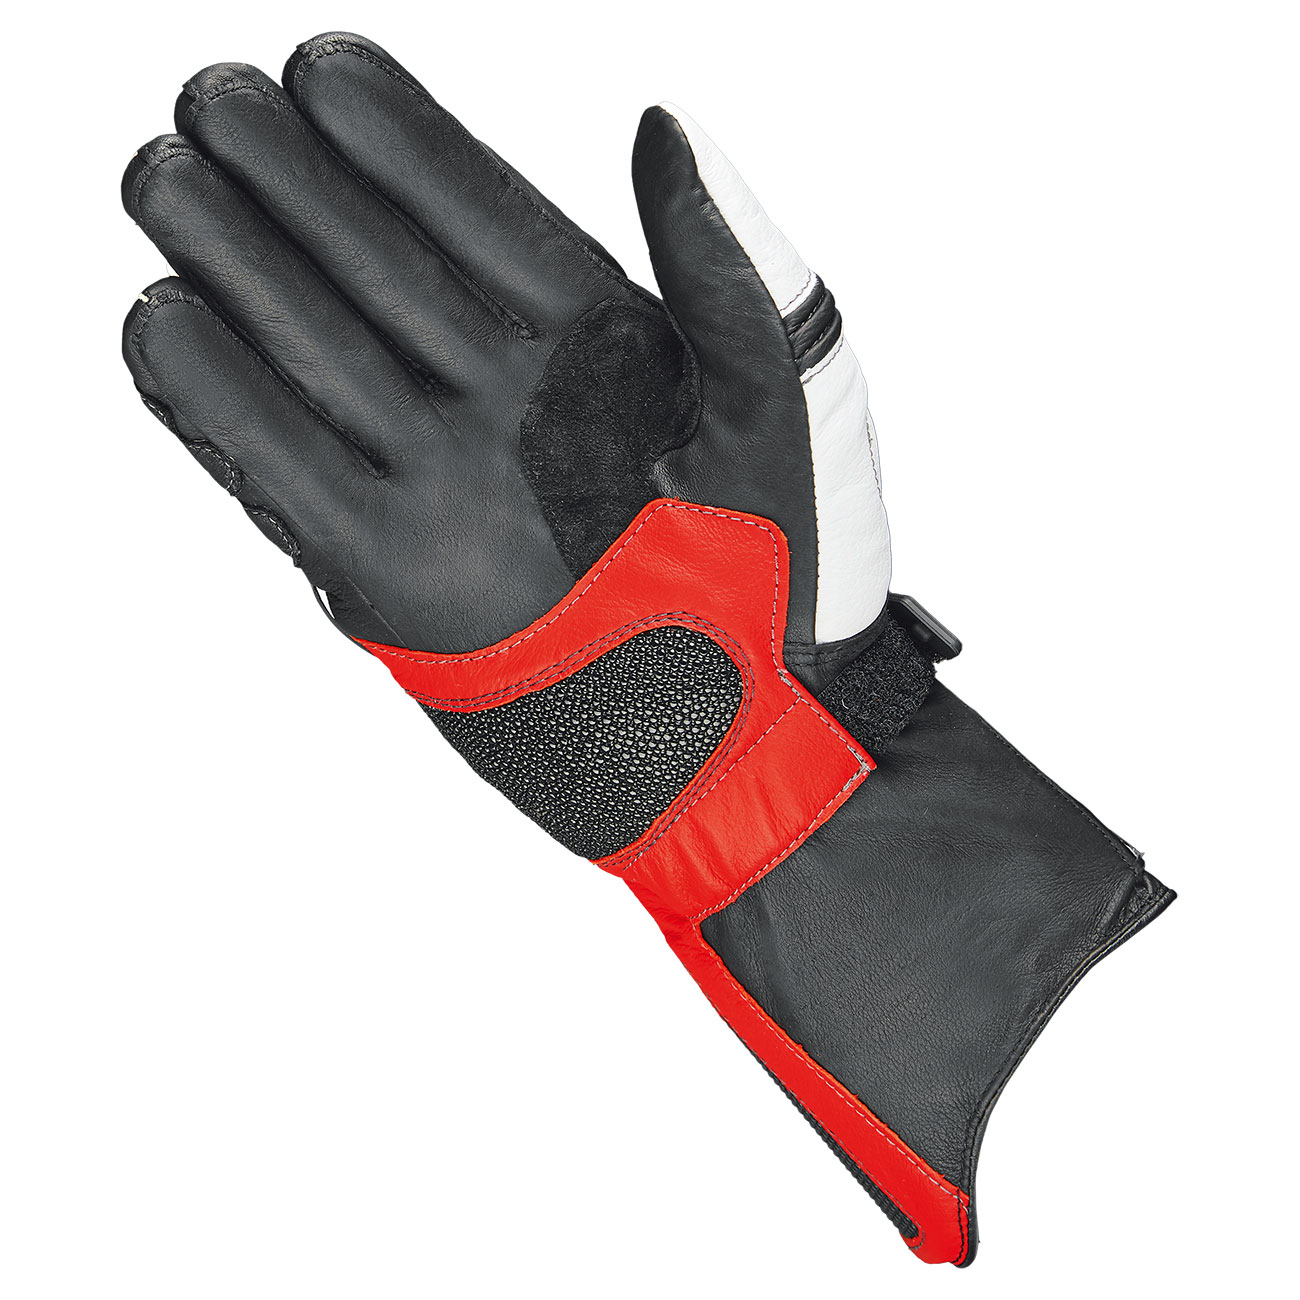 Phantom Pro Sports glove 